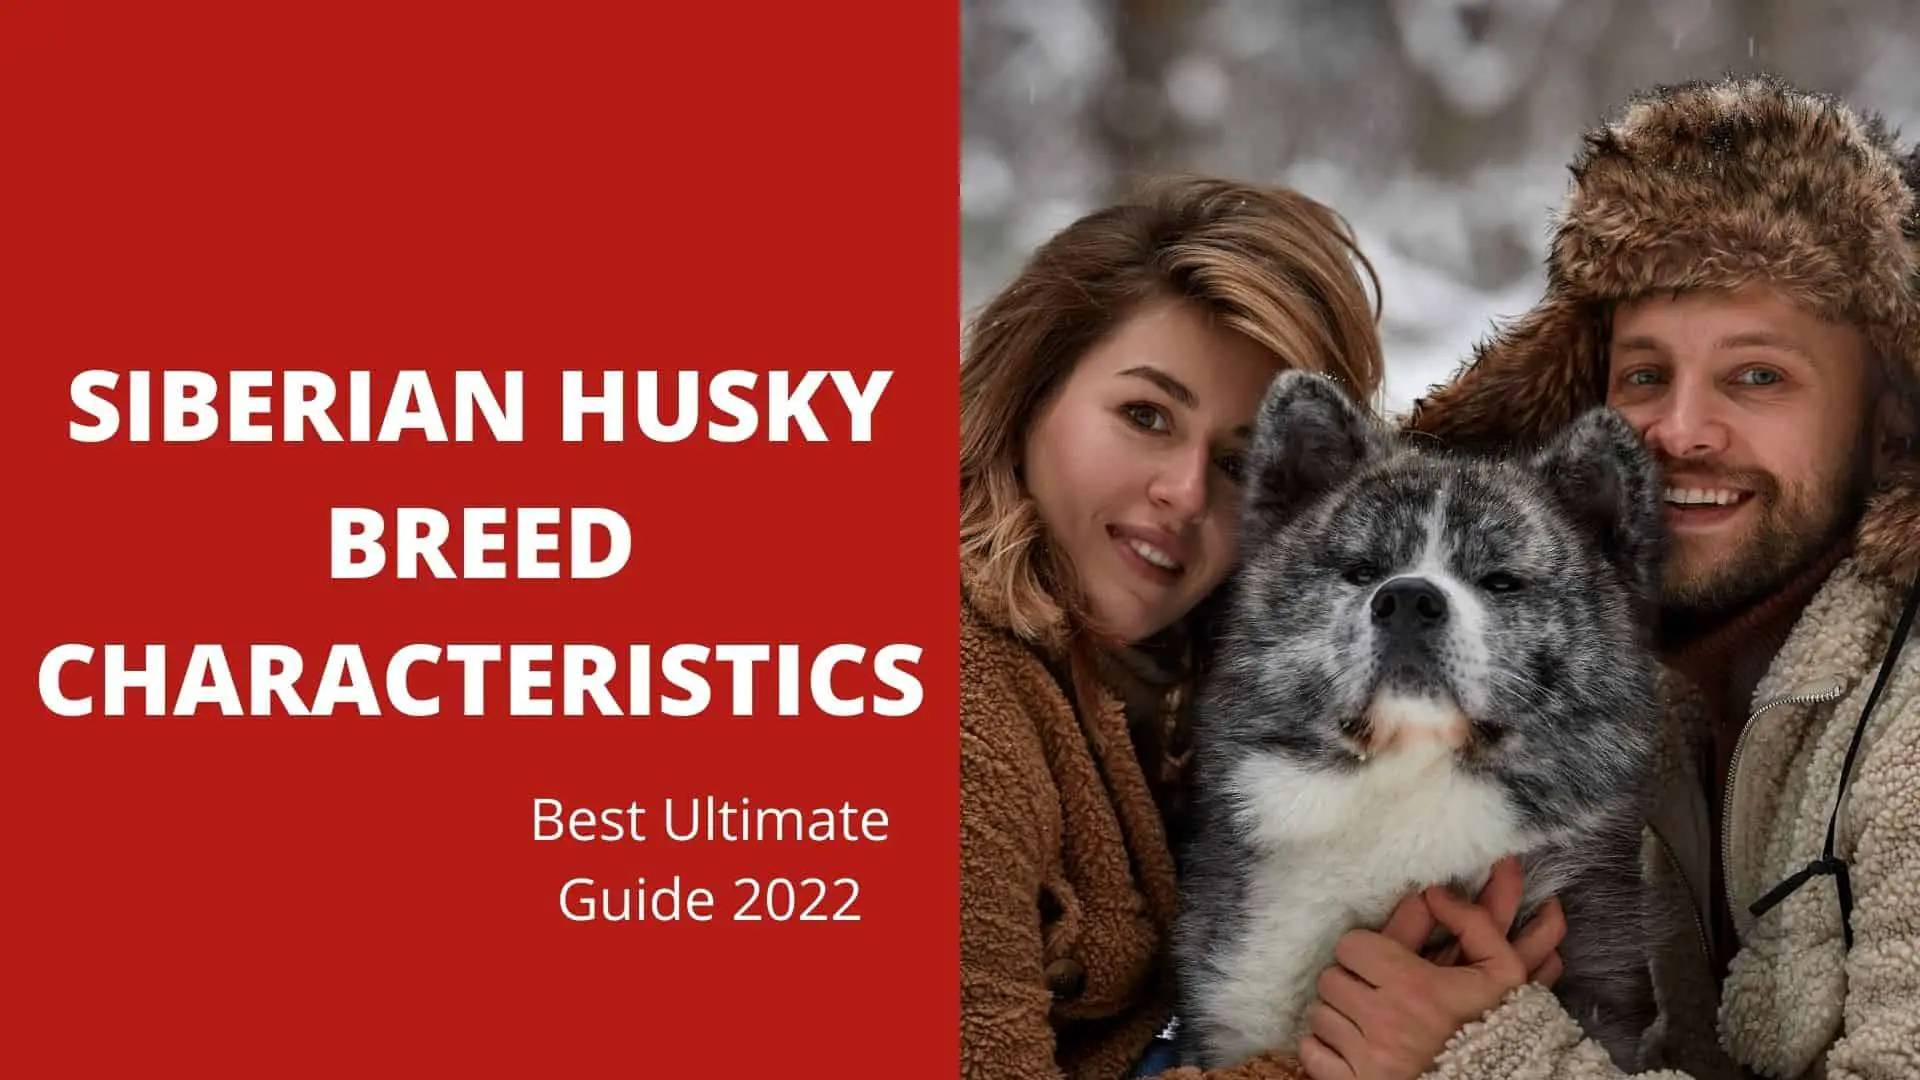 Siberian Husky Breed Characteristics (Best Ultimate Guide 2022)